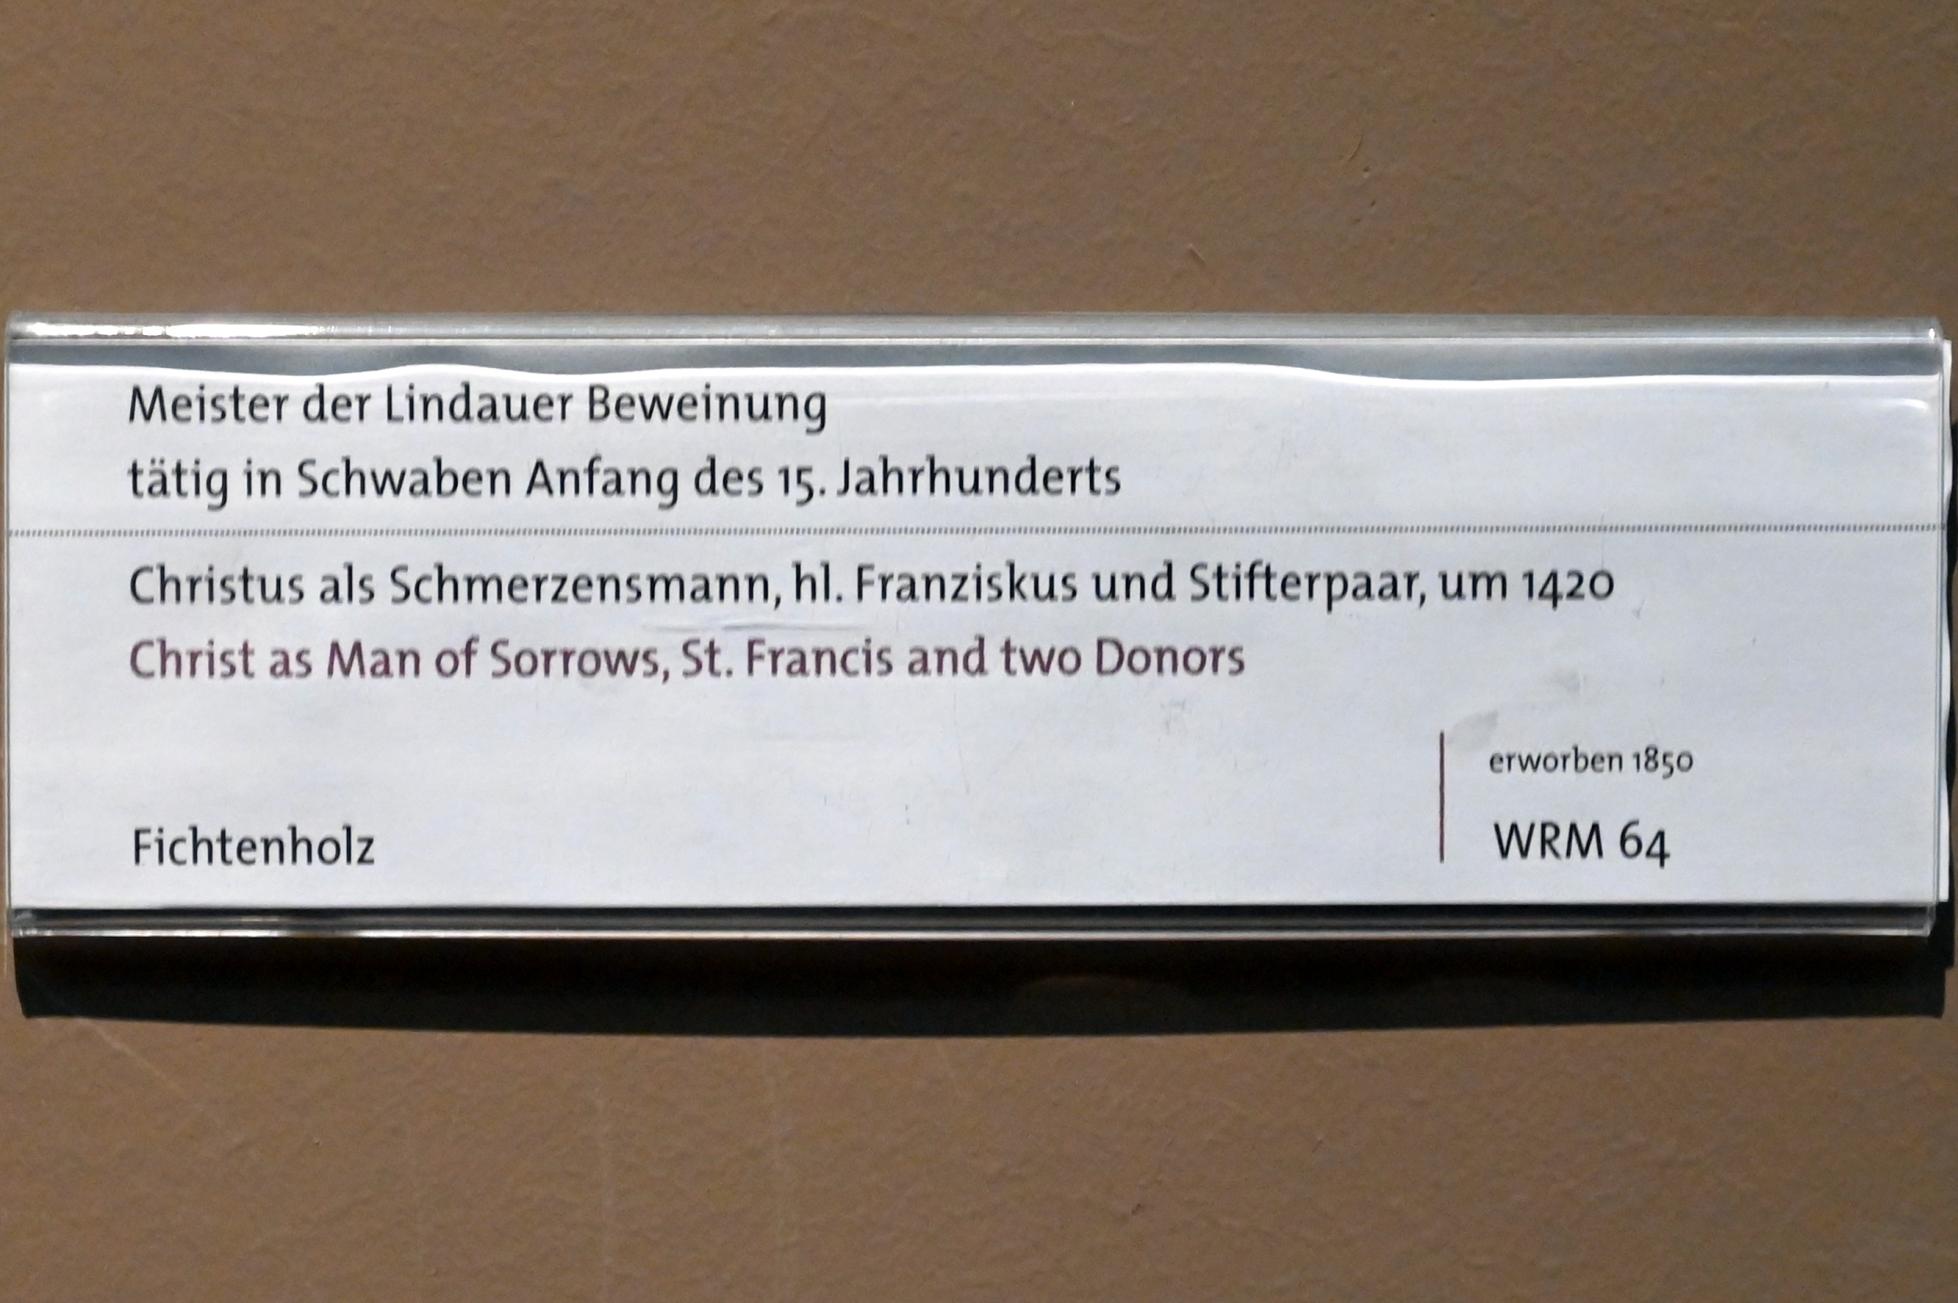 Meister der Lindauer Beweinung (1420), Christus als Schmerzensmann, hl. Franziskus und Stifterpaar, Köln, Wallraf-Richartz-Museum, Mittelalter - Saal 6, um 1420, Bild 2/2